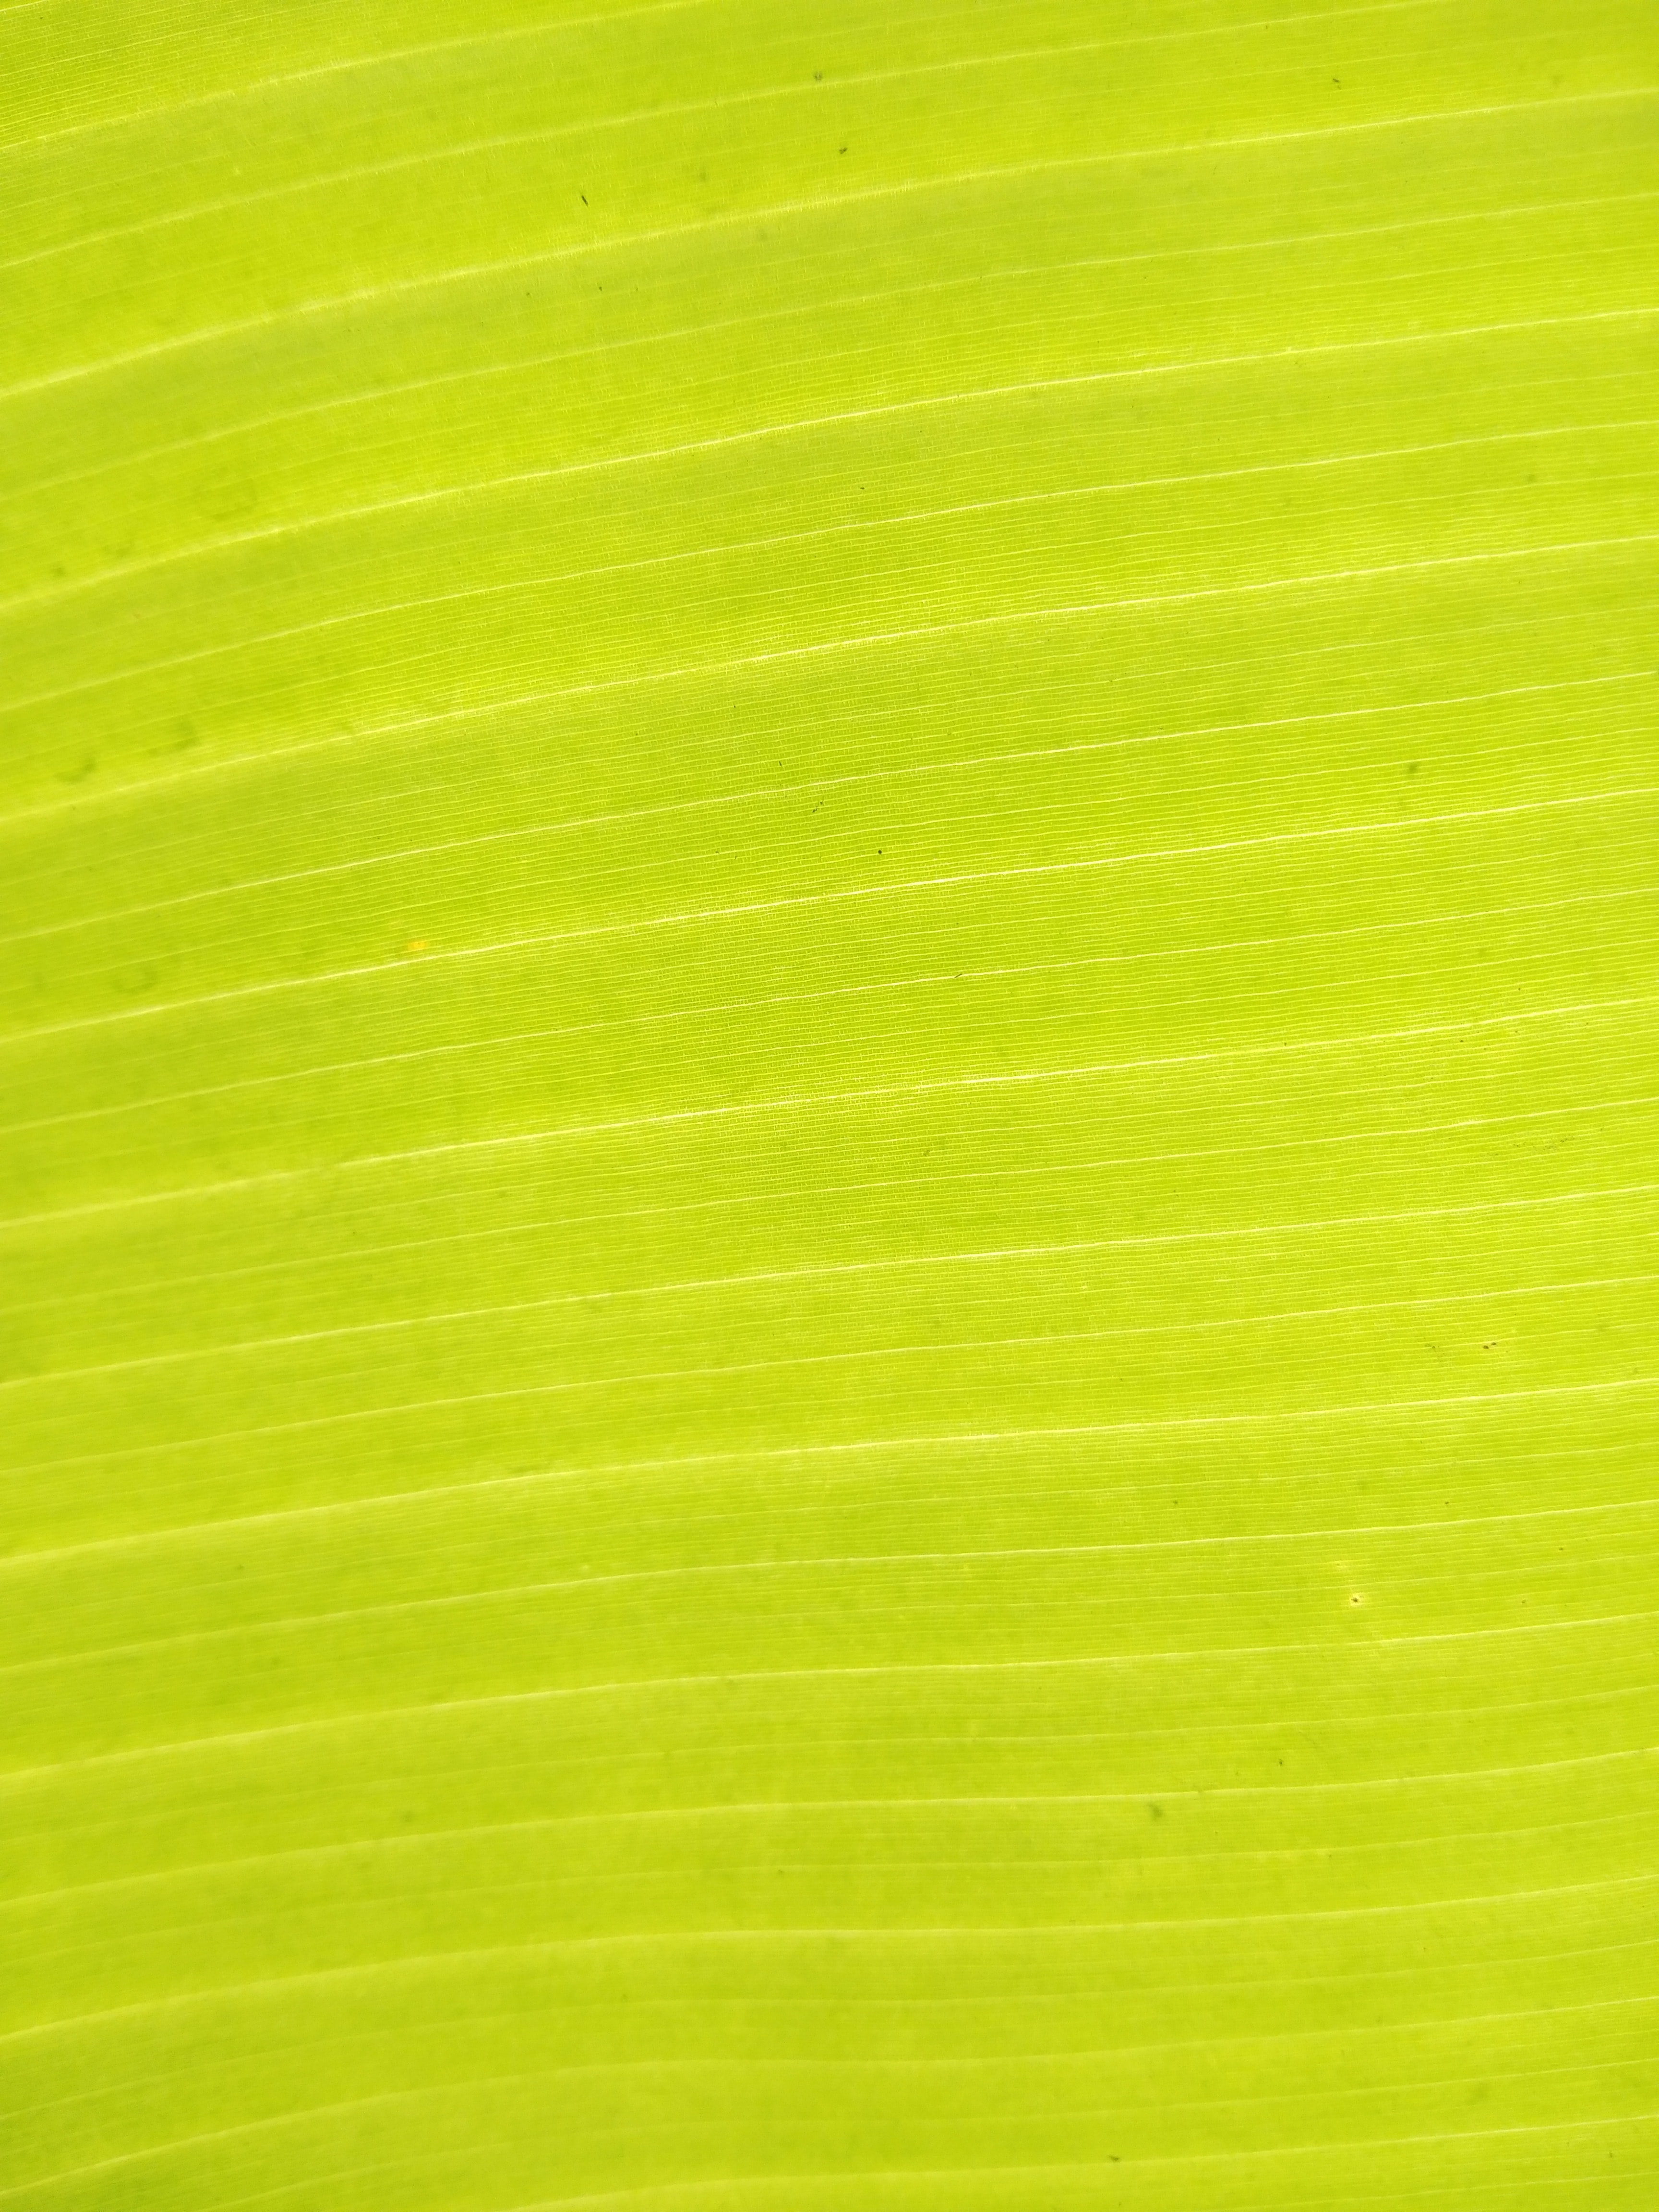 32k Wallpaper Plant leaf, sheet, macro, green